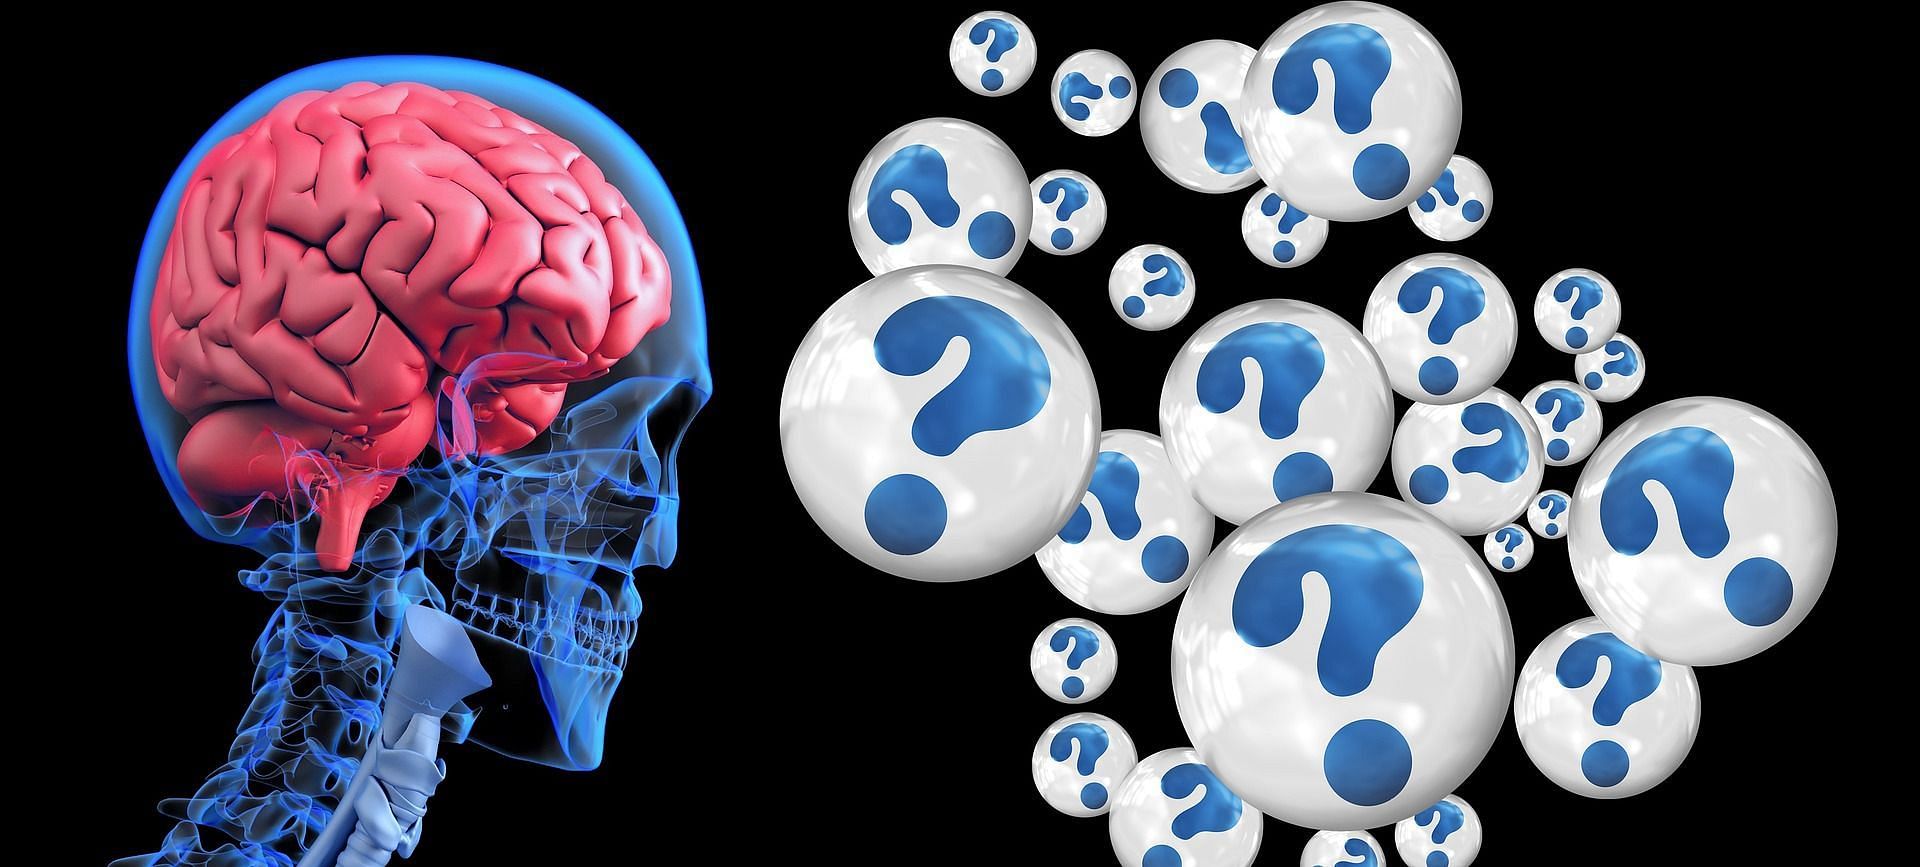 How can we train our brain for success through neuroscience? (Image via Pixabay/ Altmann)